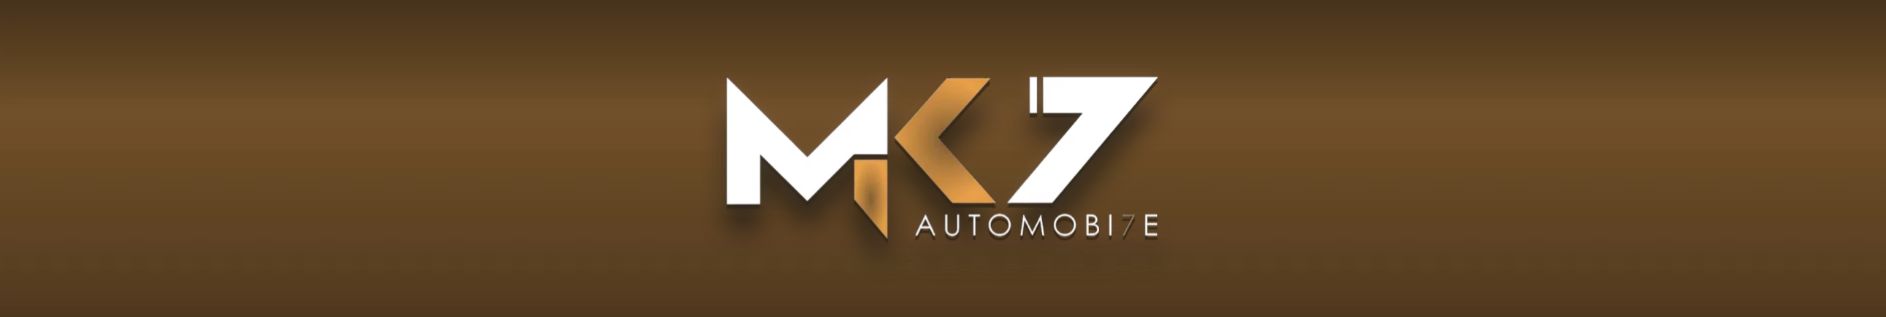 MK7 Automóveis top banner